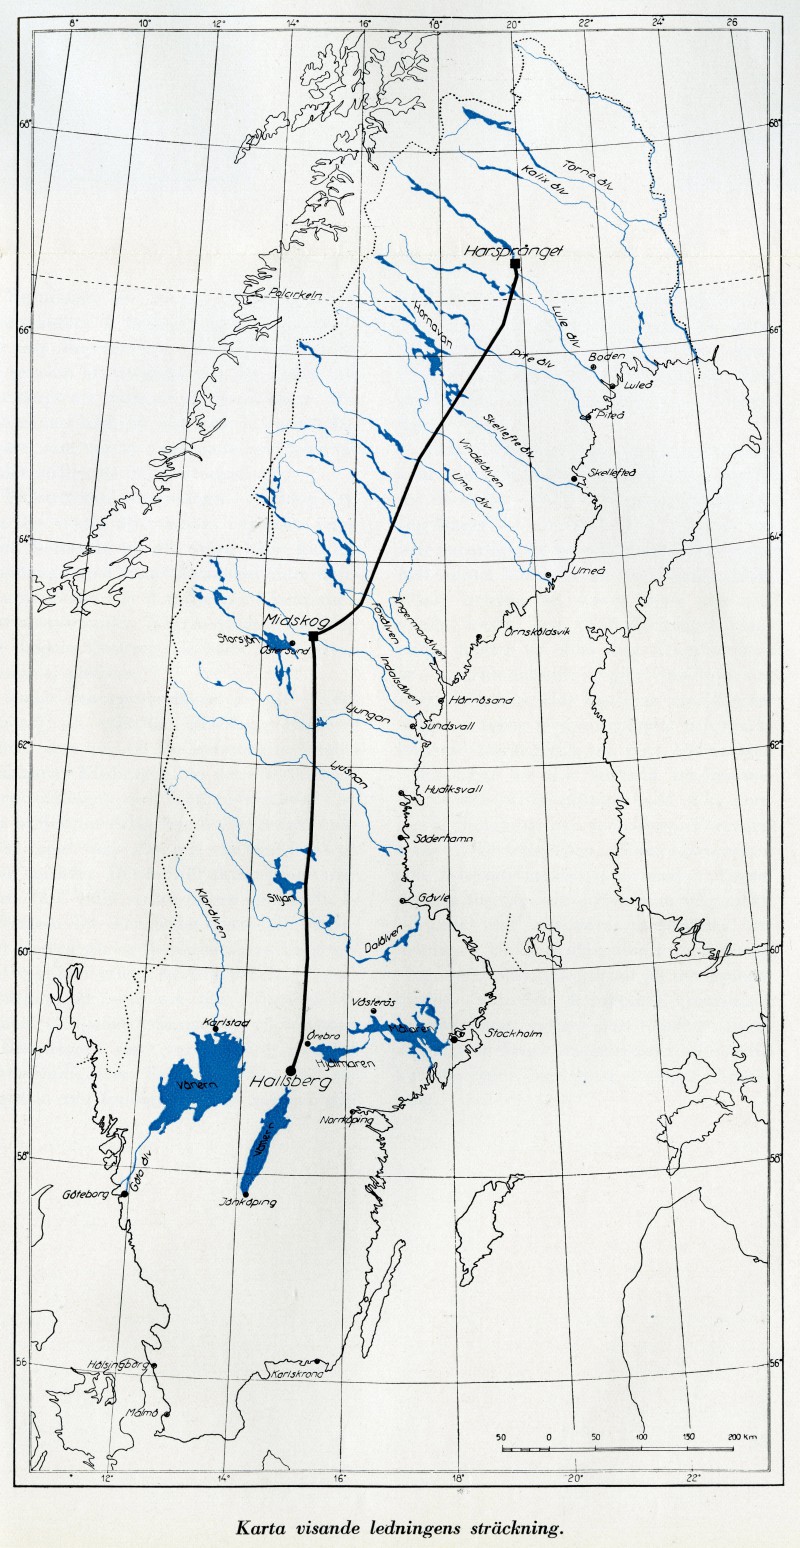 A map of the power line between Harsprånget and Hallsberg